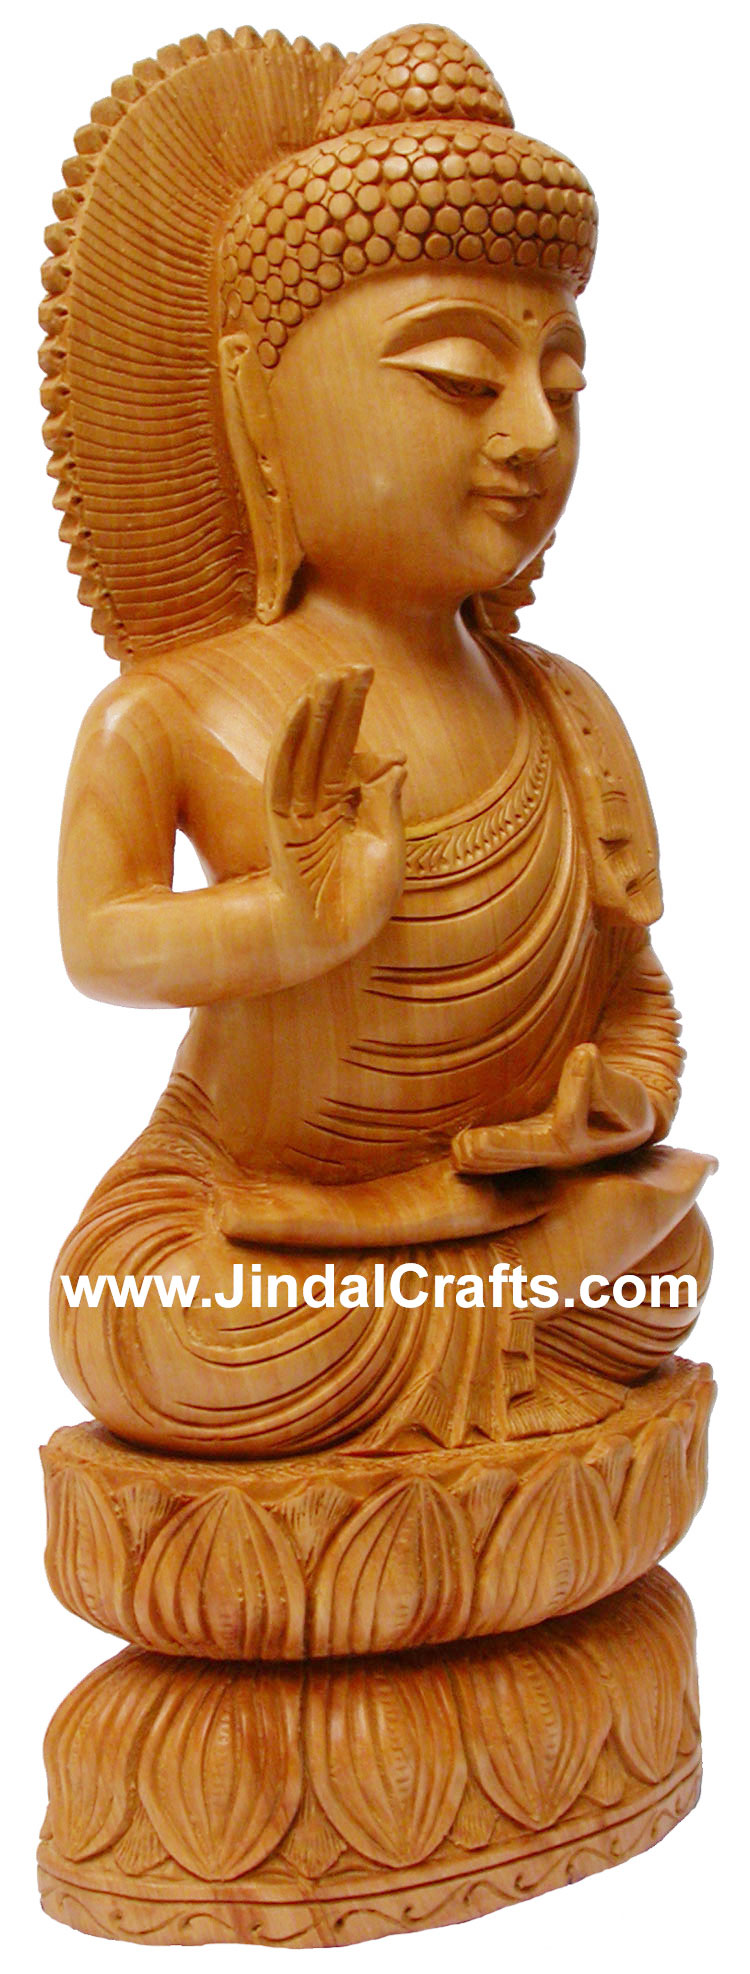 Handmade Buddha Statue Lotus Carvings Unique Indian Art Buddhism Sculpture Murti